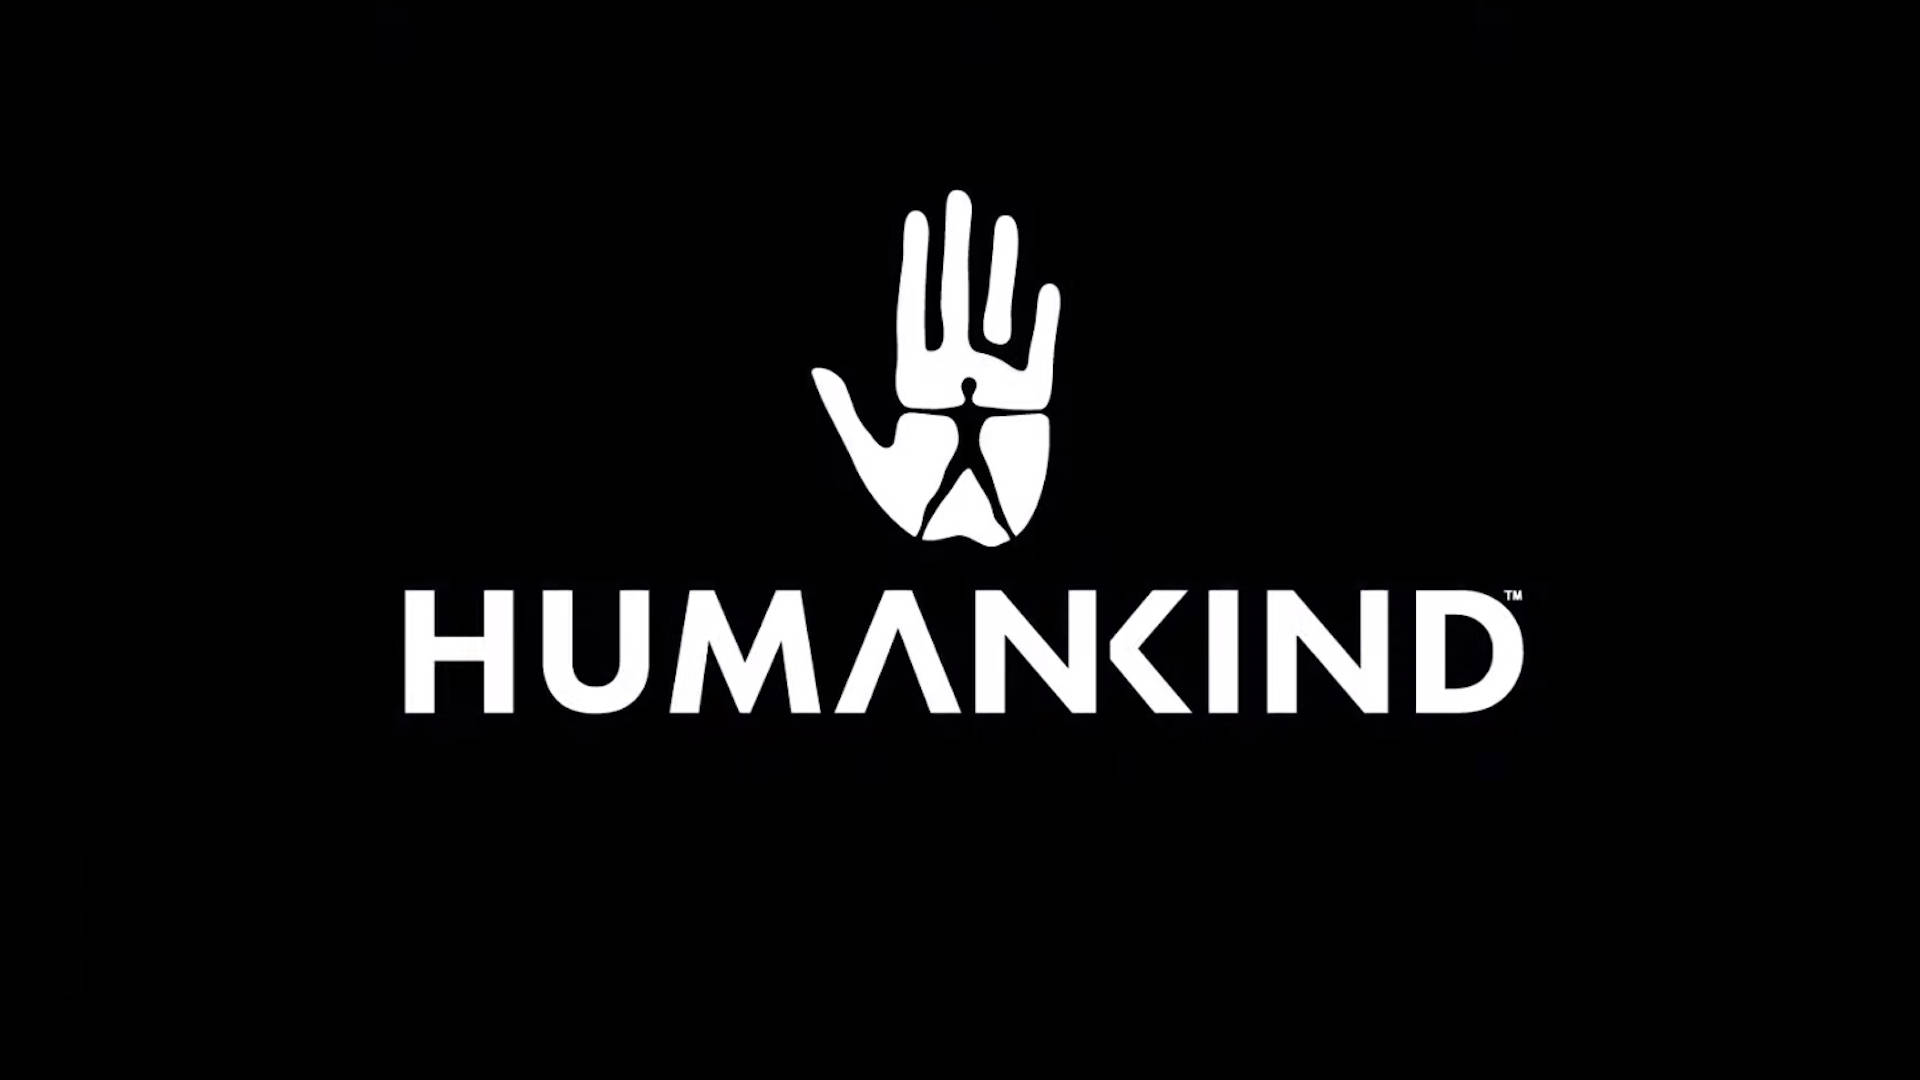 Humankind Background Photos